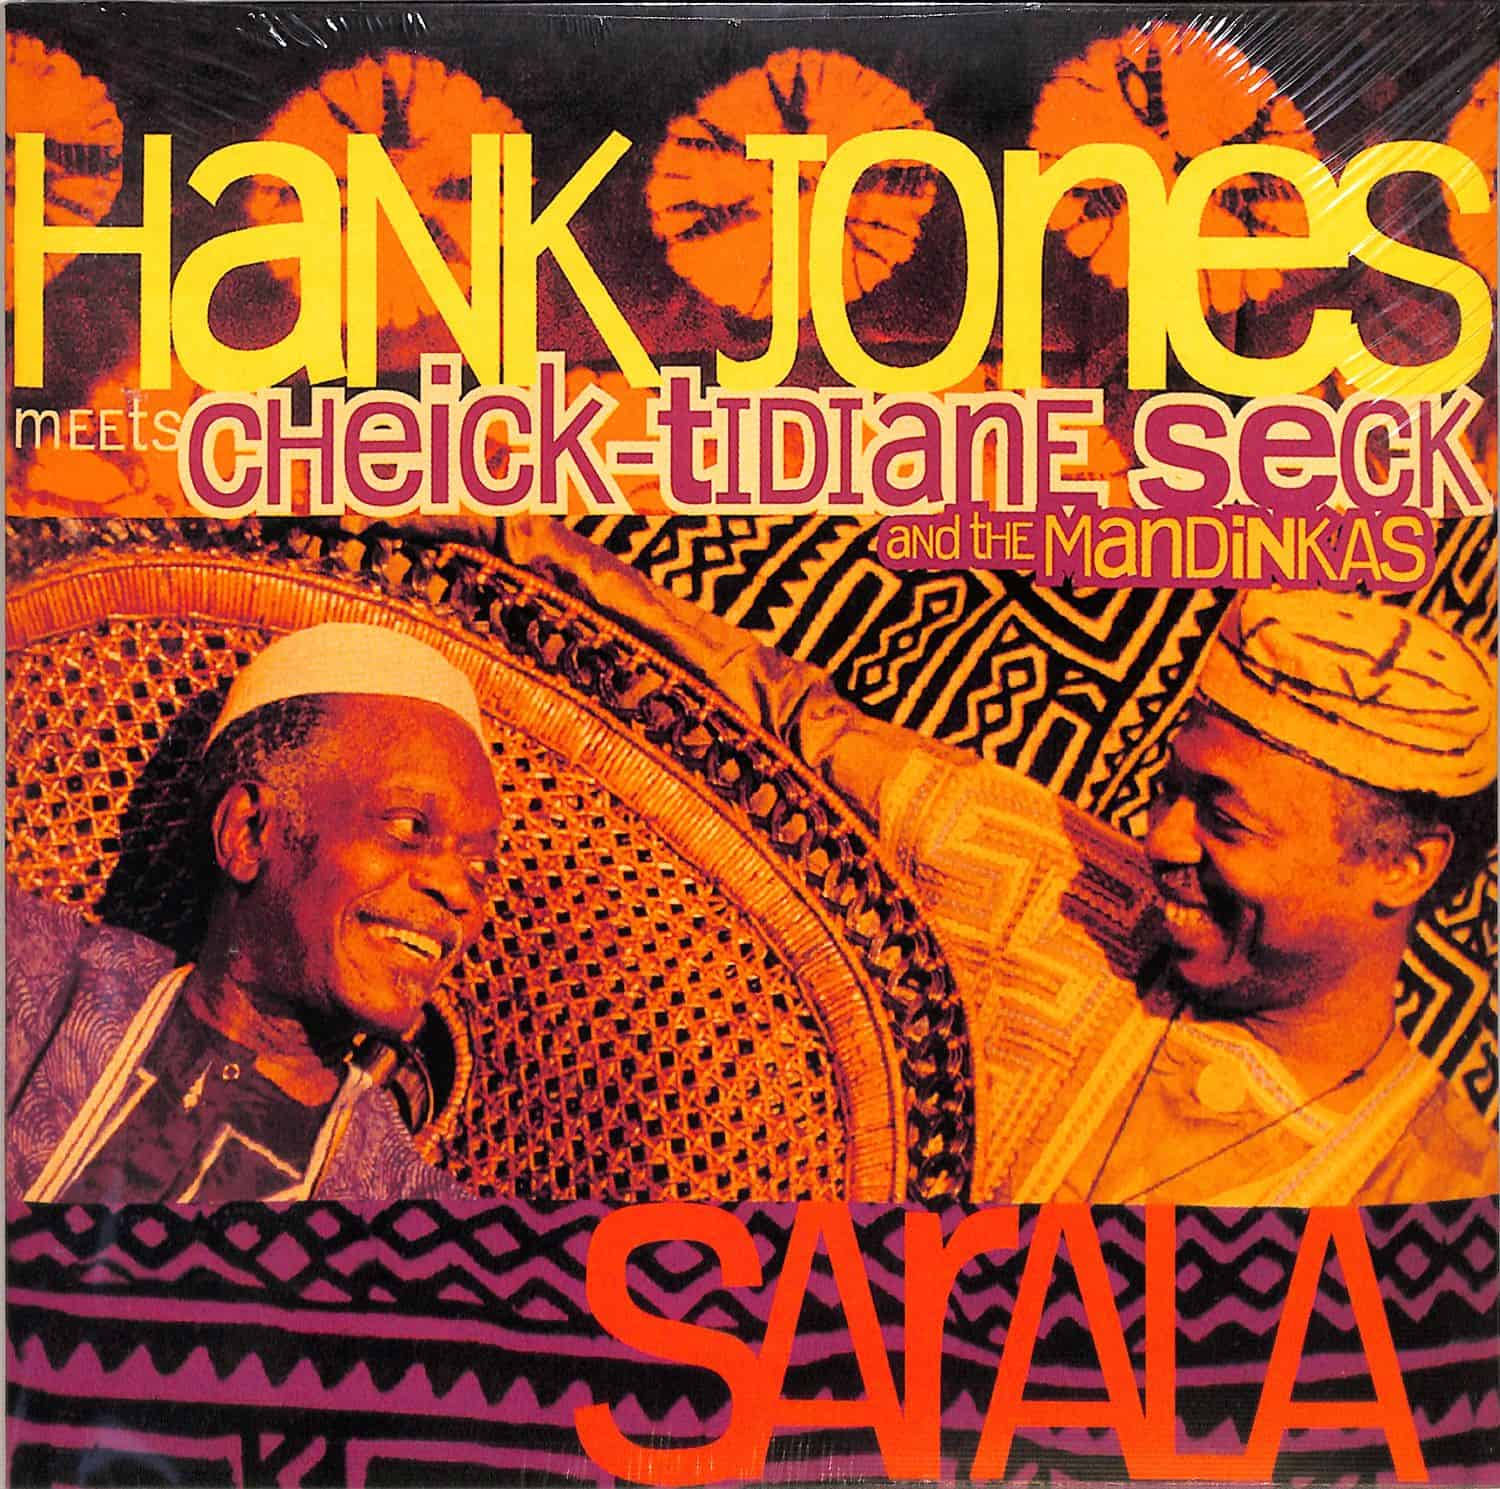 Hank Jones meets Cheick-Tidiane Seck and The Mandinkas - SARALA 